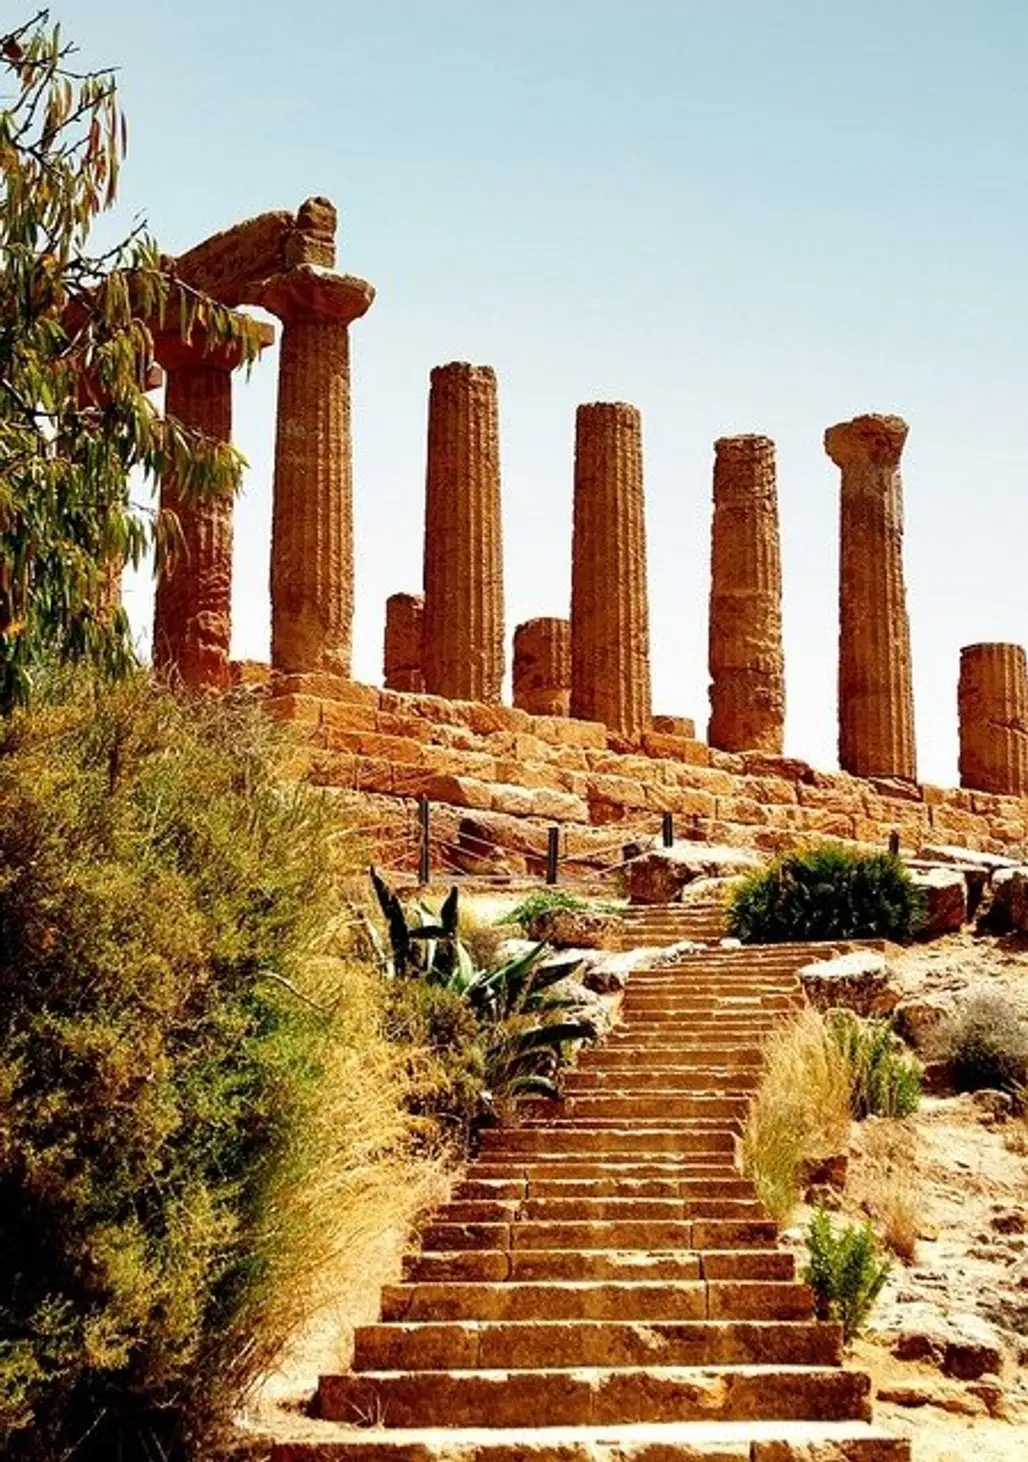 The Temple of Hera and Juno Lacinia, Agrigento, Sicily